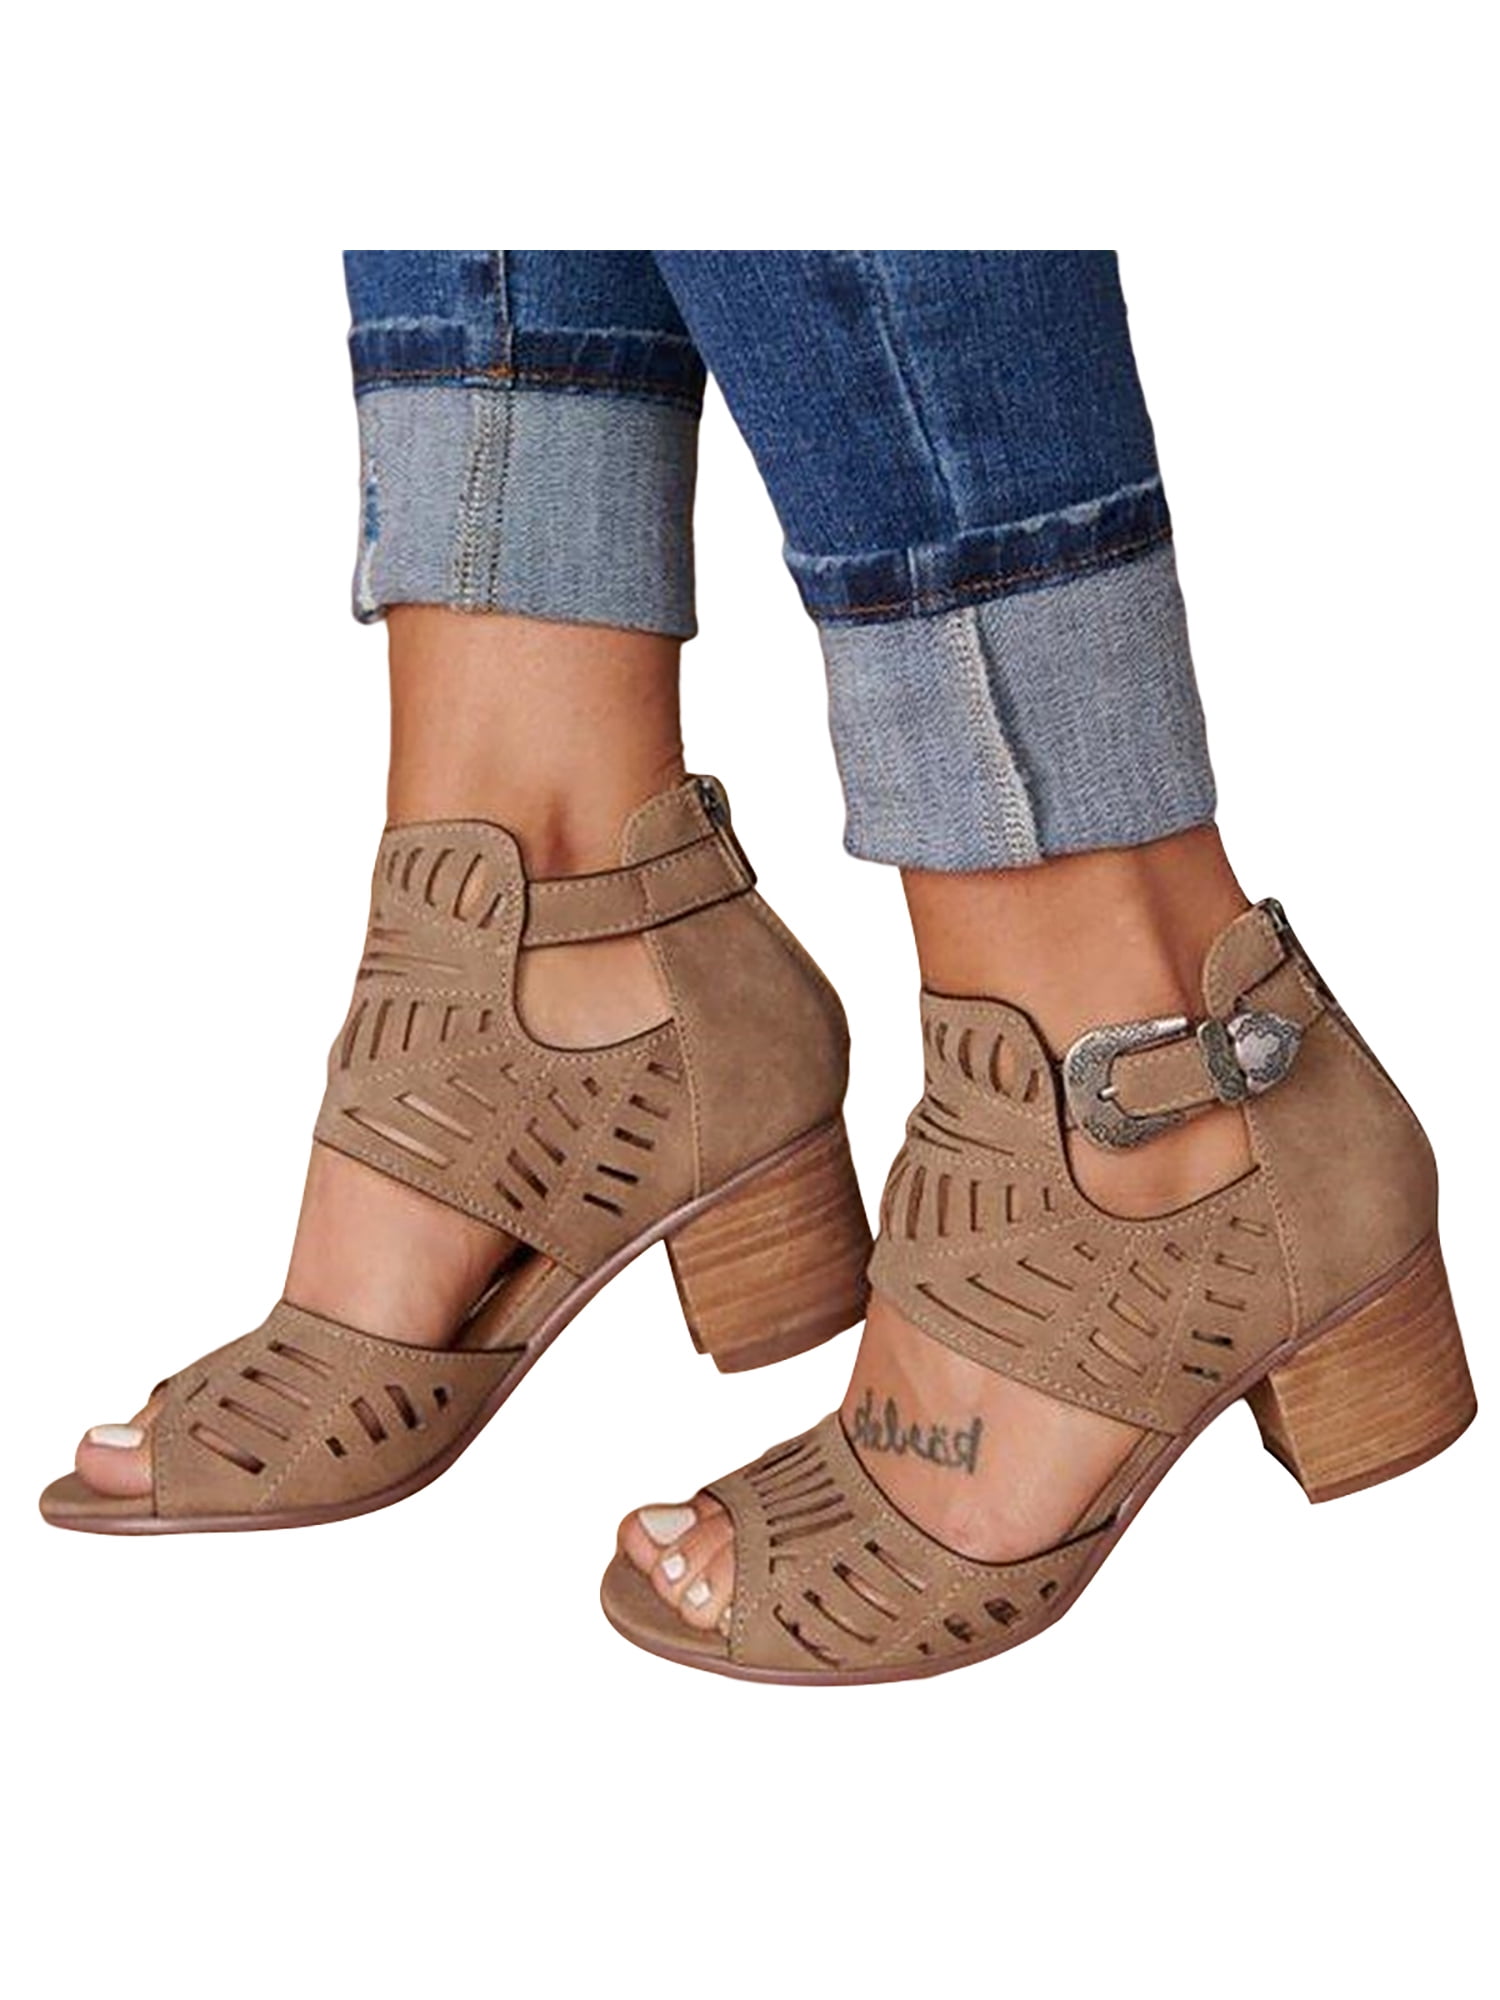 Classic Women's Peep Toe Work Pumps Wedge Mid Heels Slip On Dating Sandals Shoes